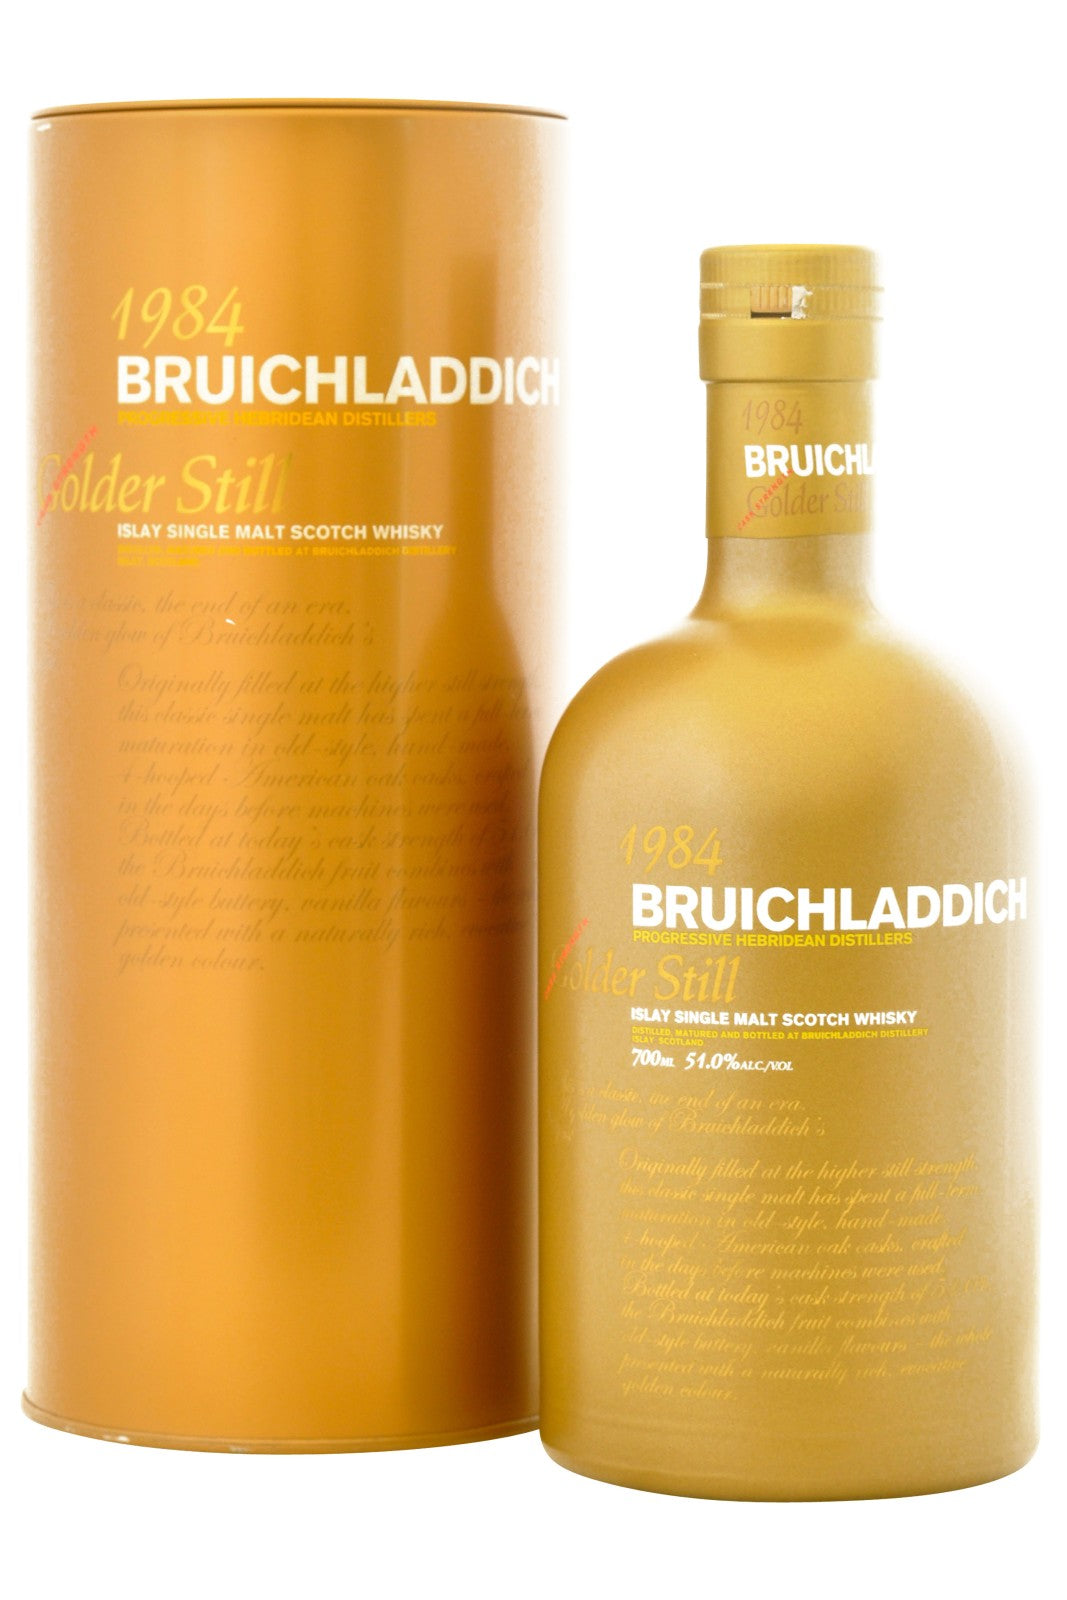 Bruichladdich Golder Still